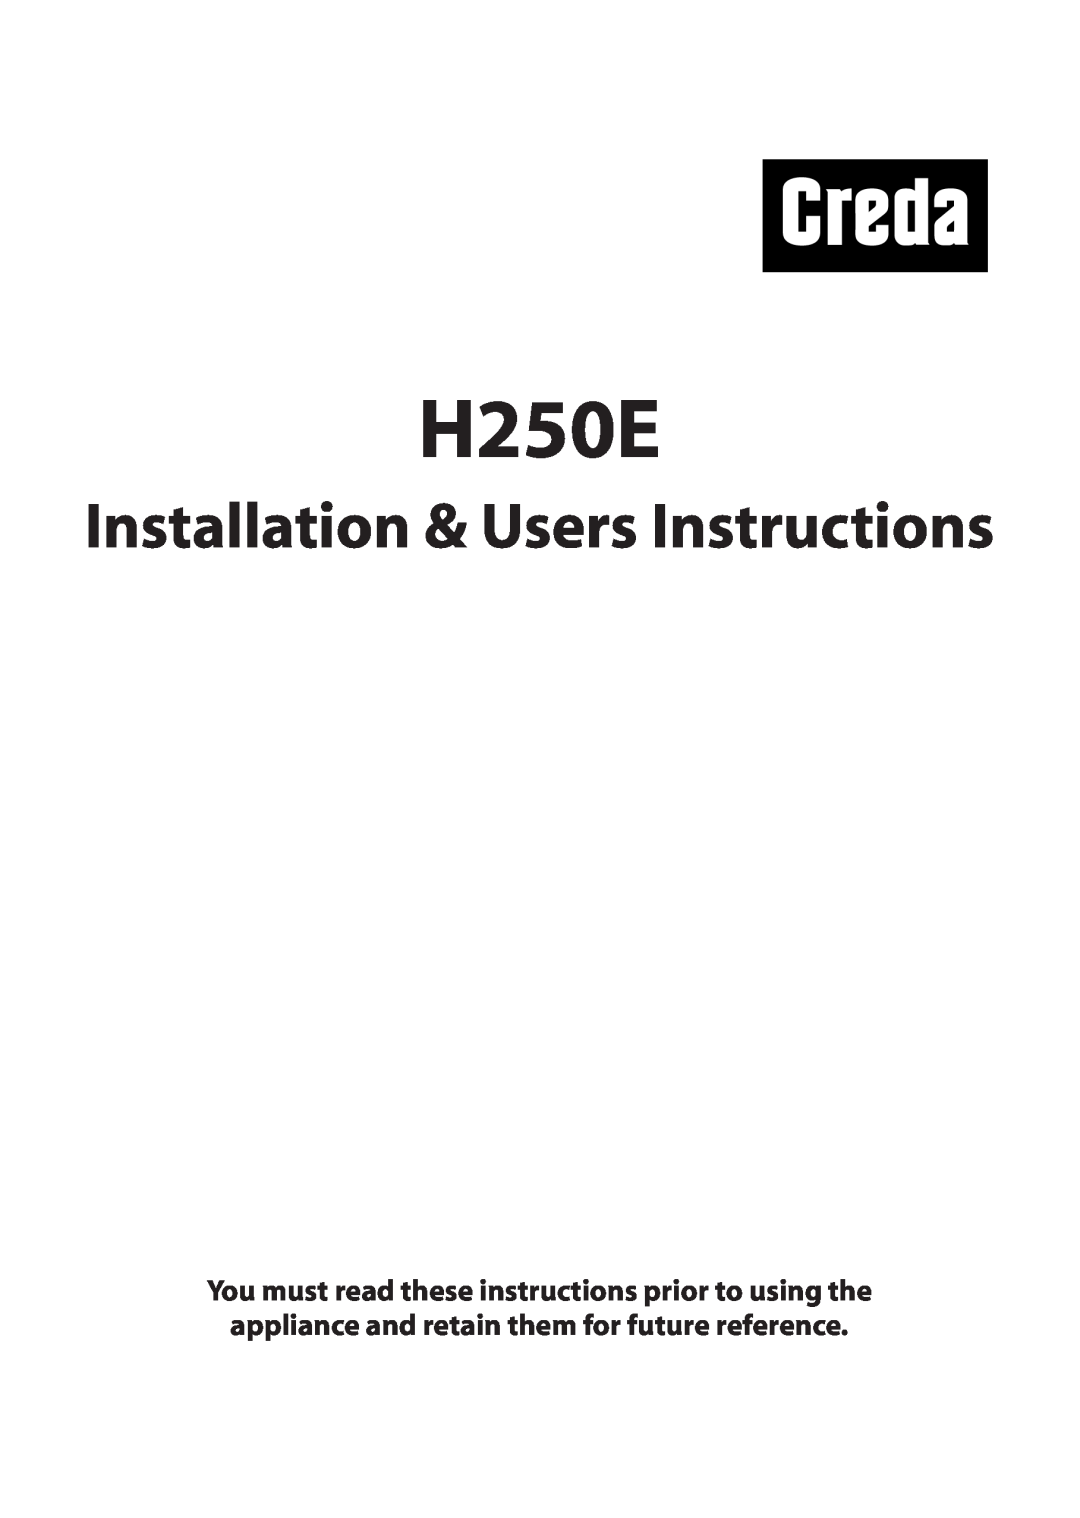 Creda H250E manual Installation & Users Instructions 